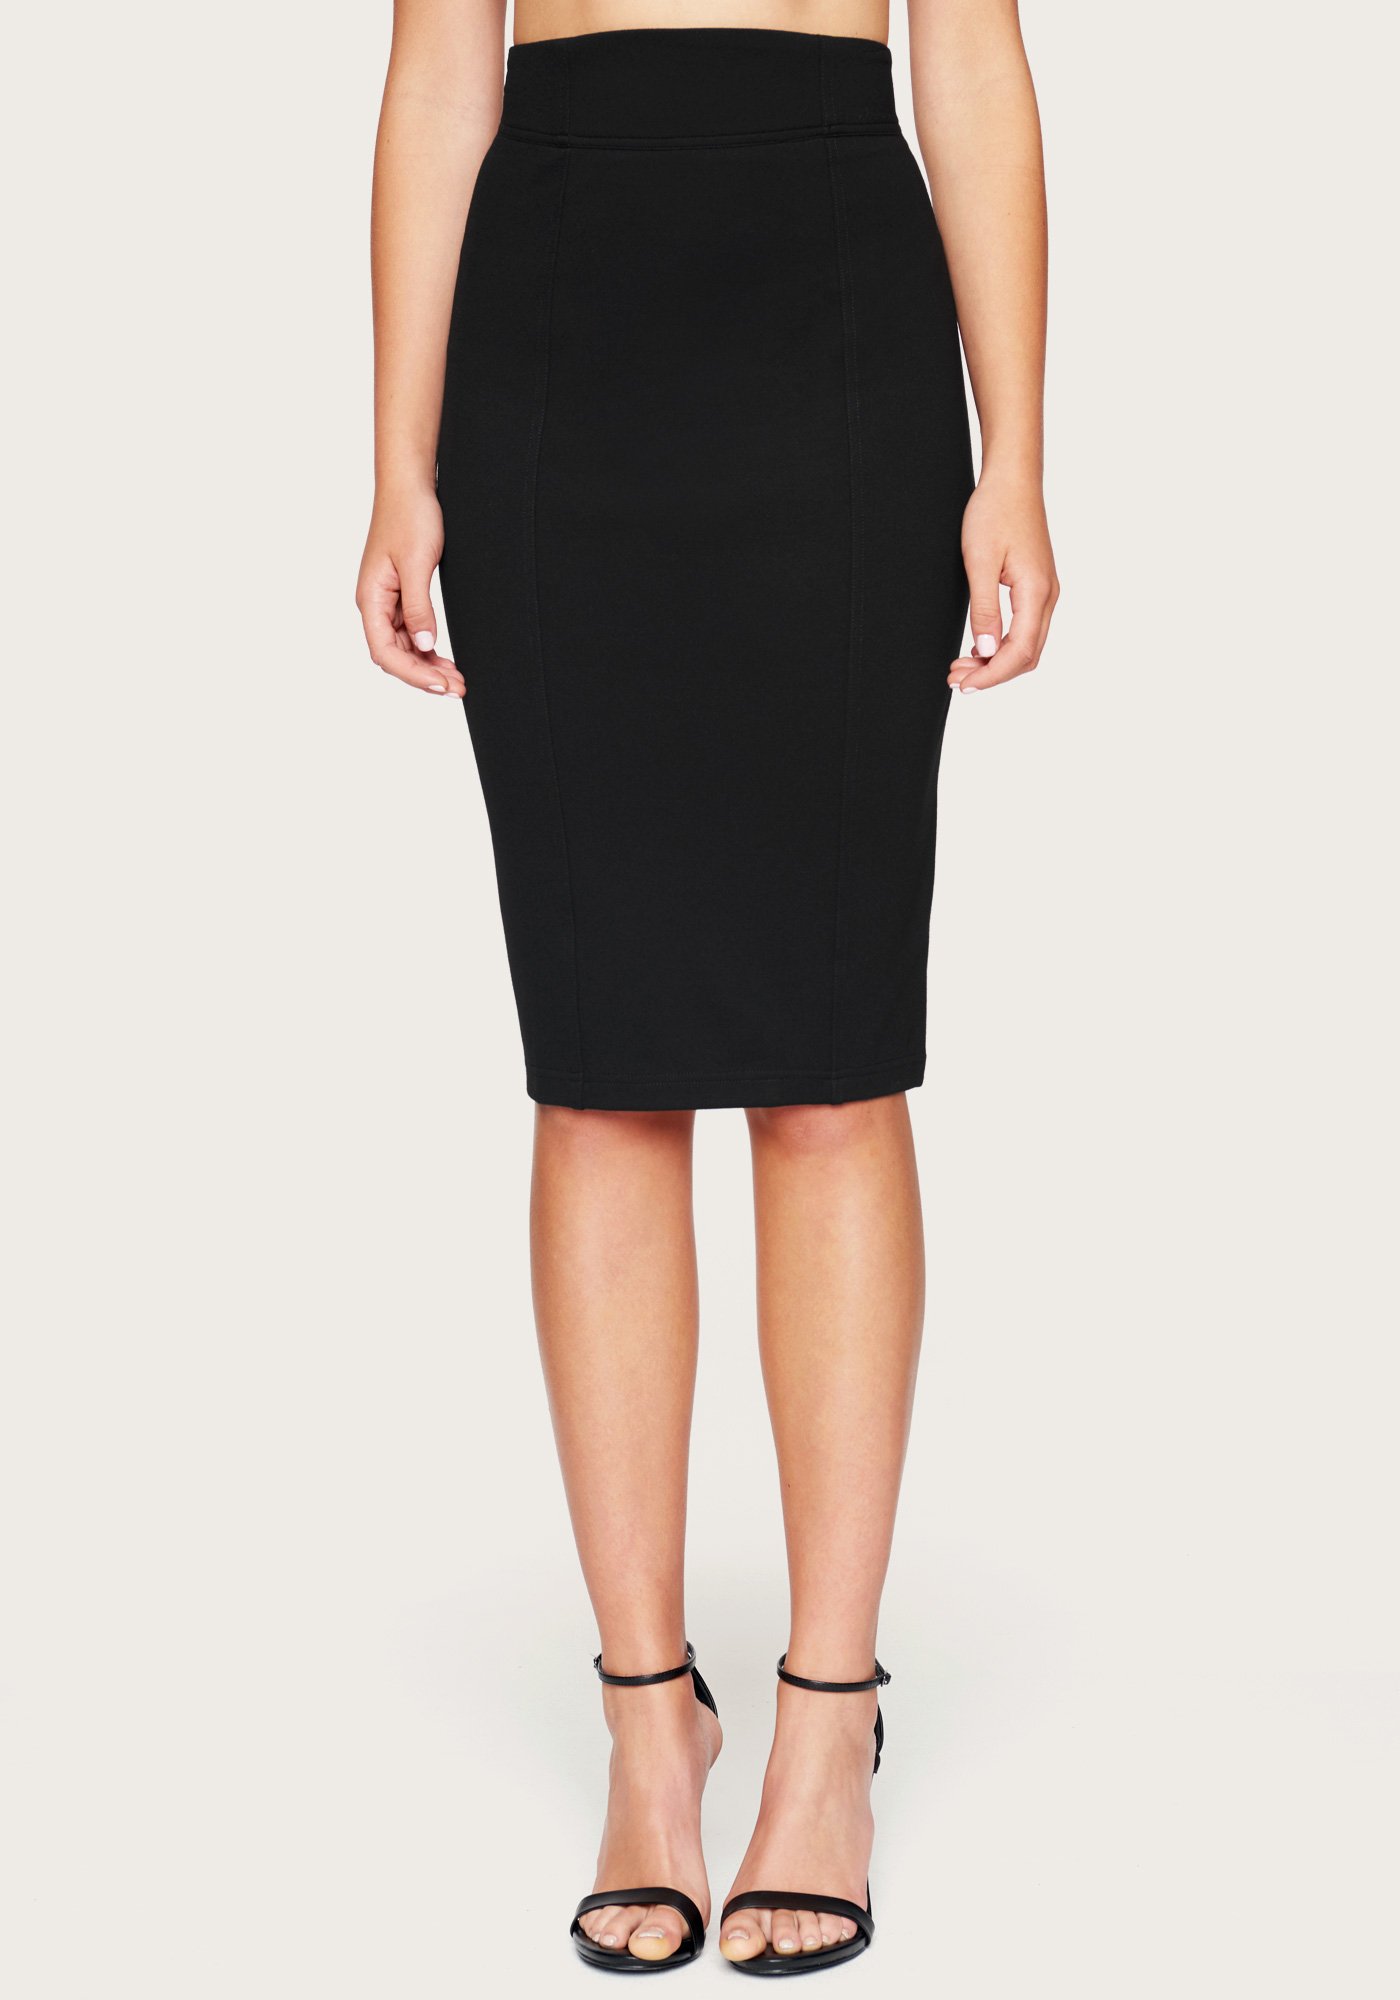 Bebe Women's Seamed Ponte Skirt, Size XL in Black Spandex/Nylon